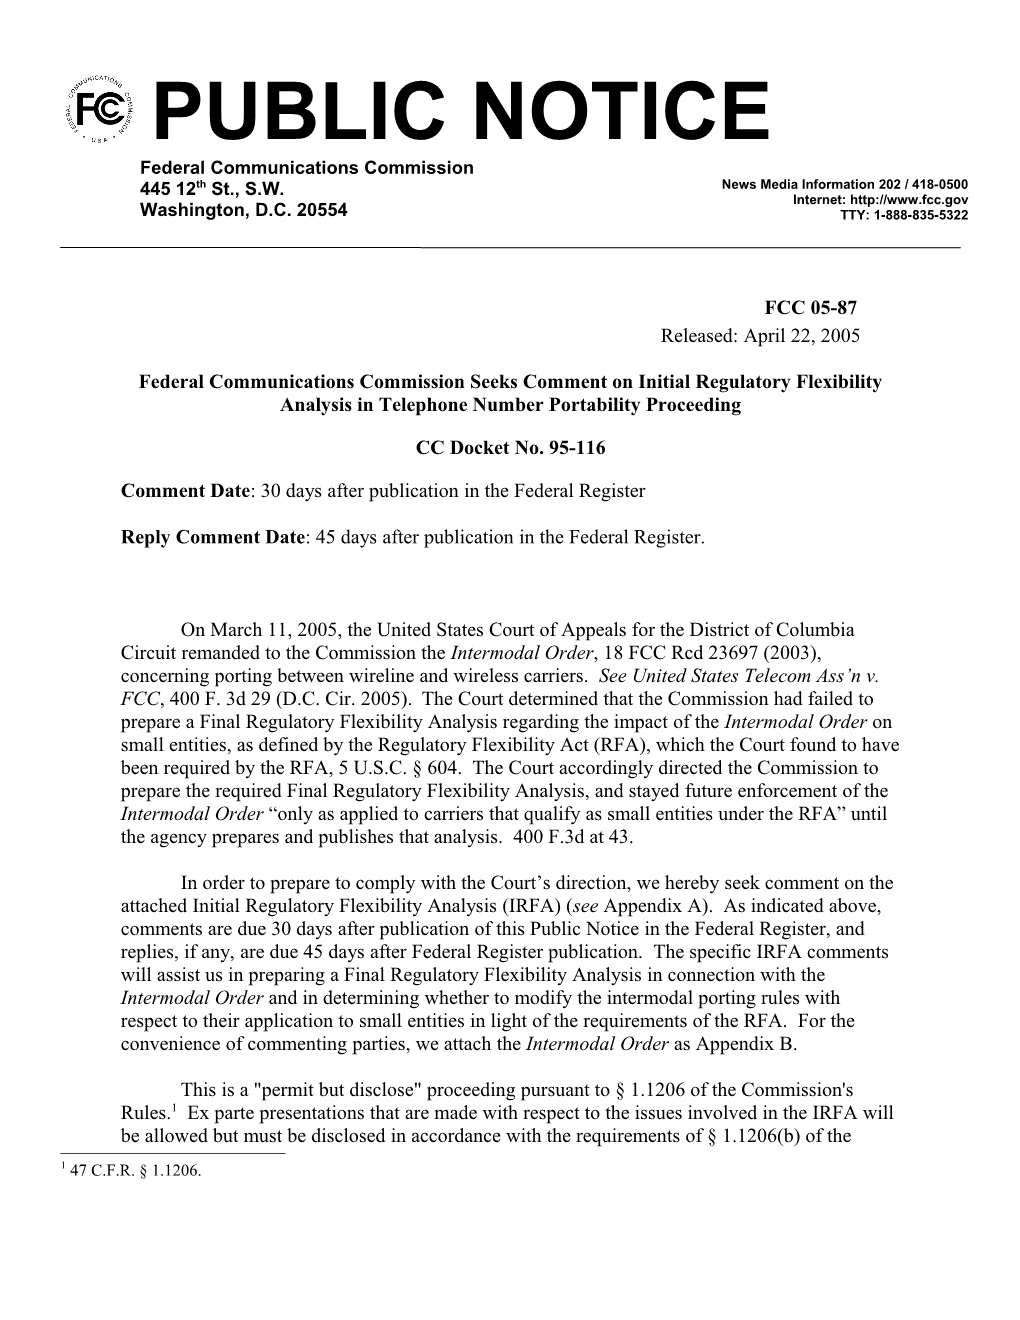 Federal Communications Commission FCC 05-87